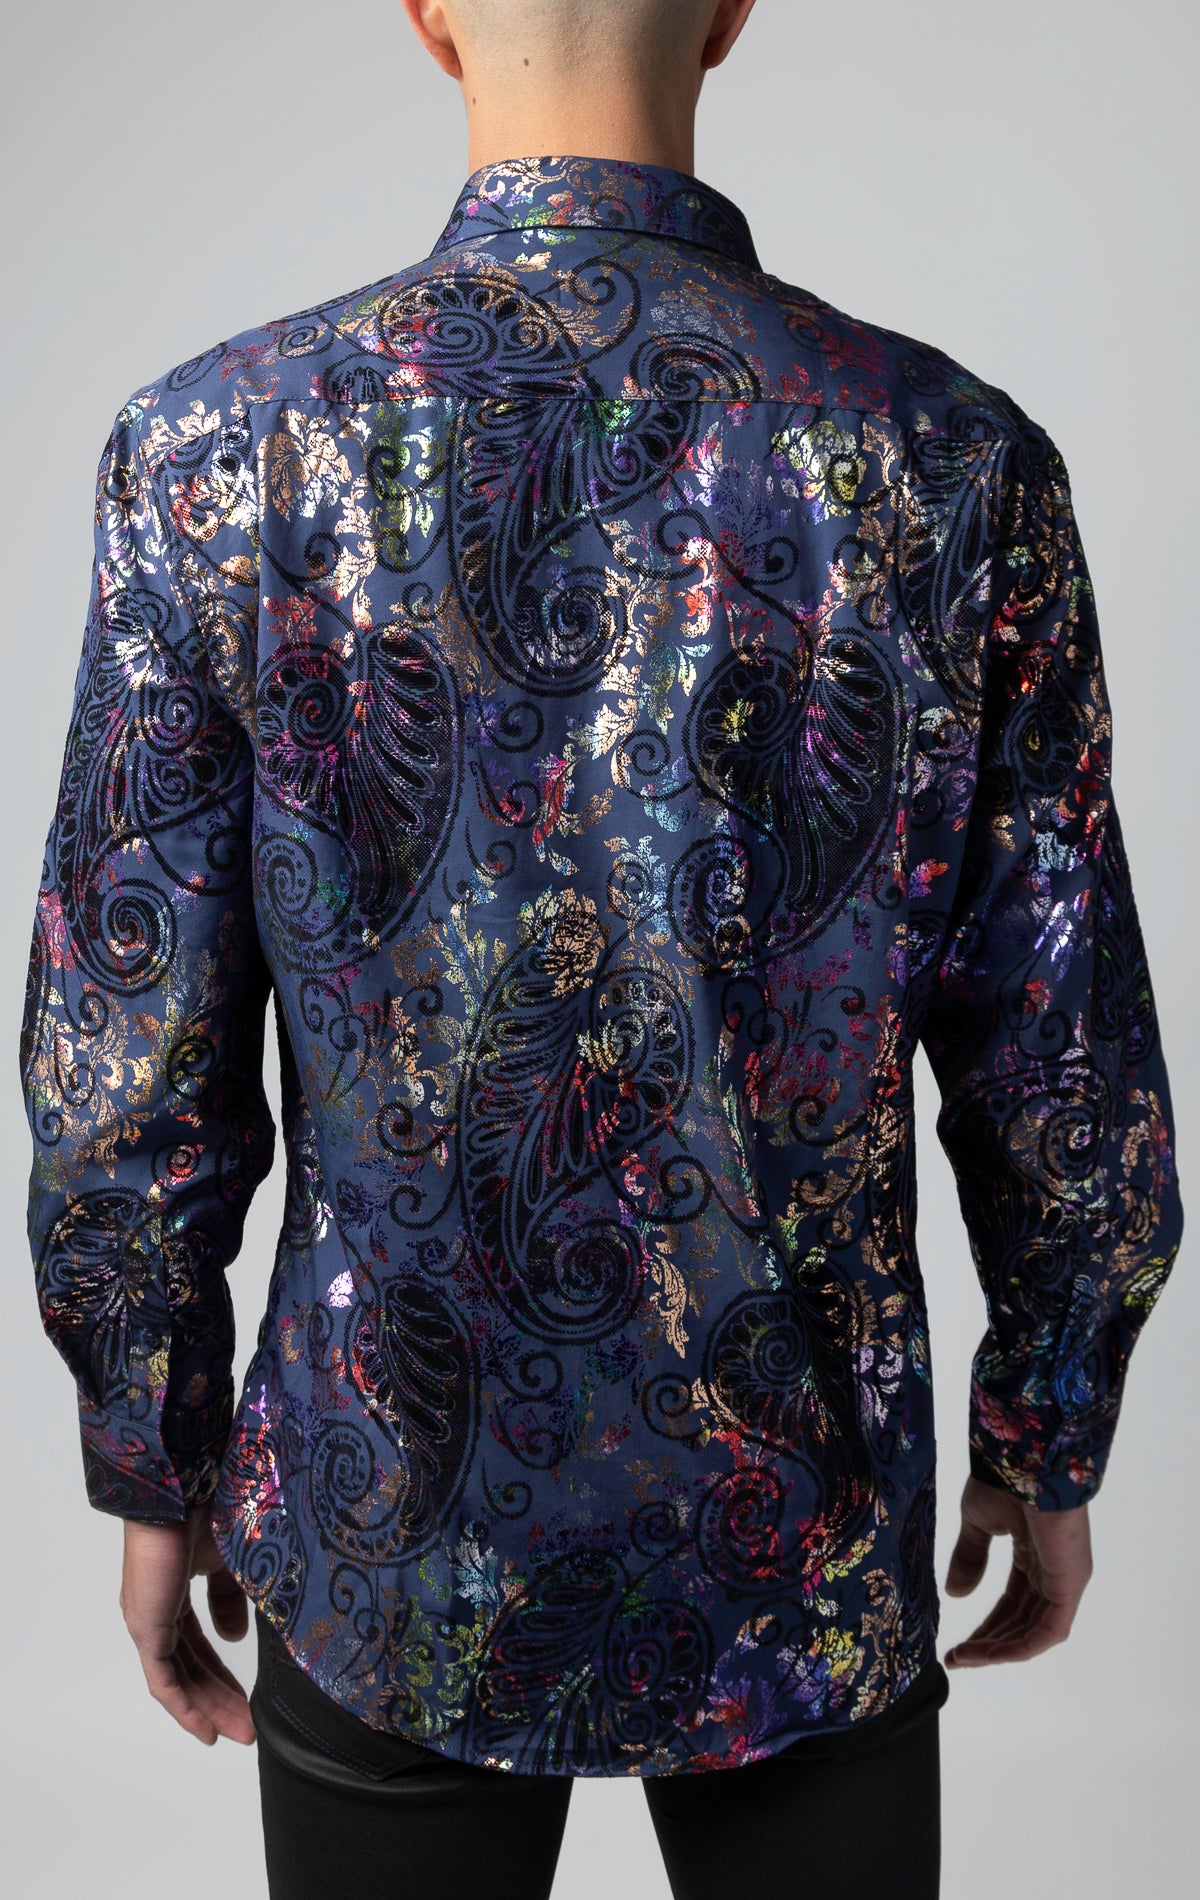  long sleeve dress shirt featuring a captivating multicolor velvet paisley design